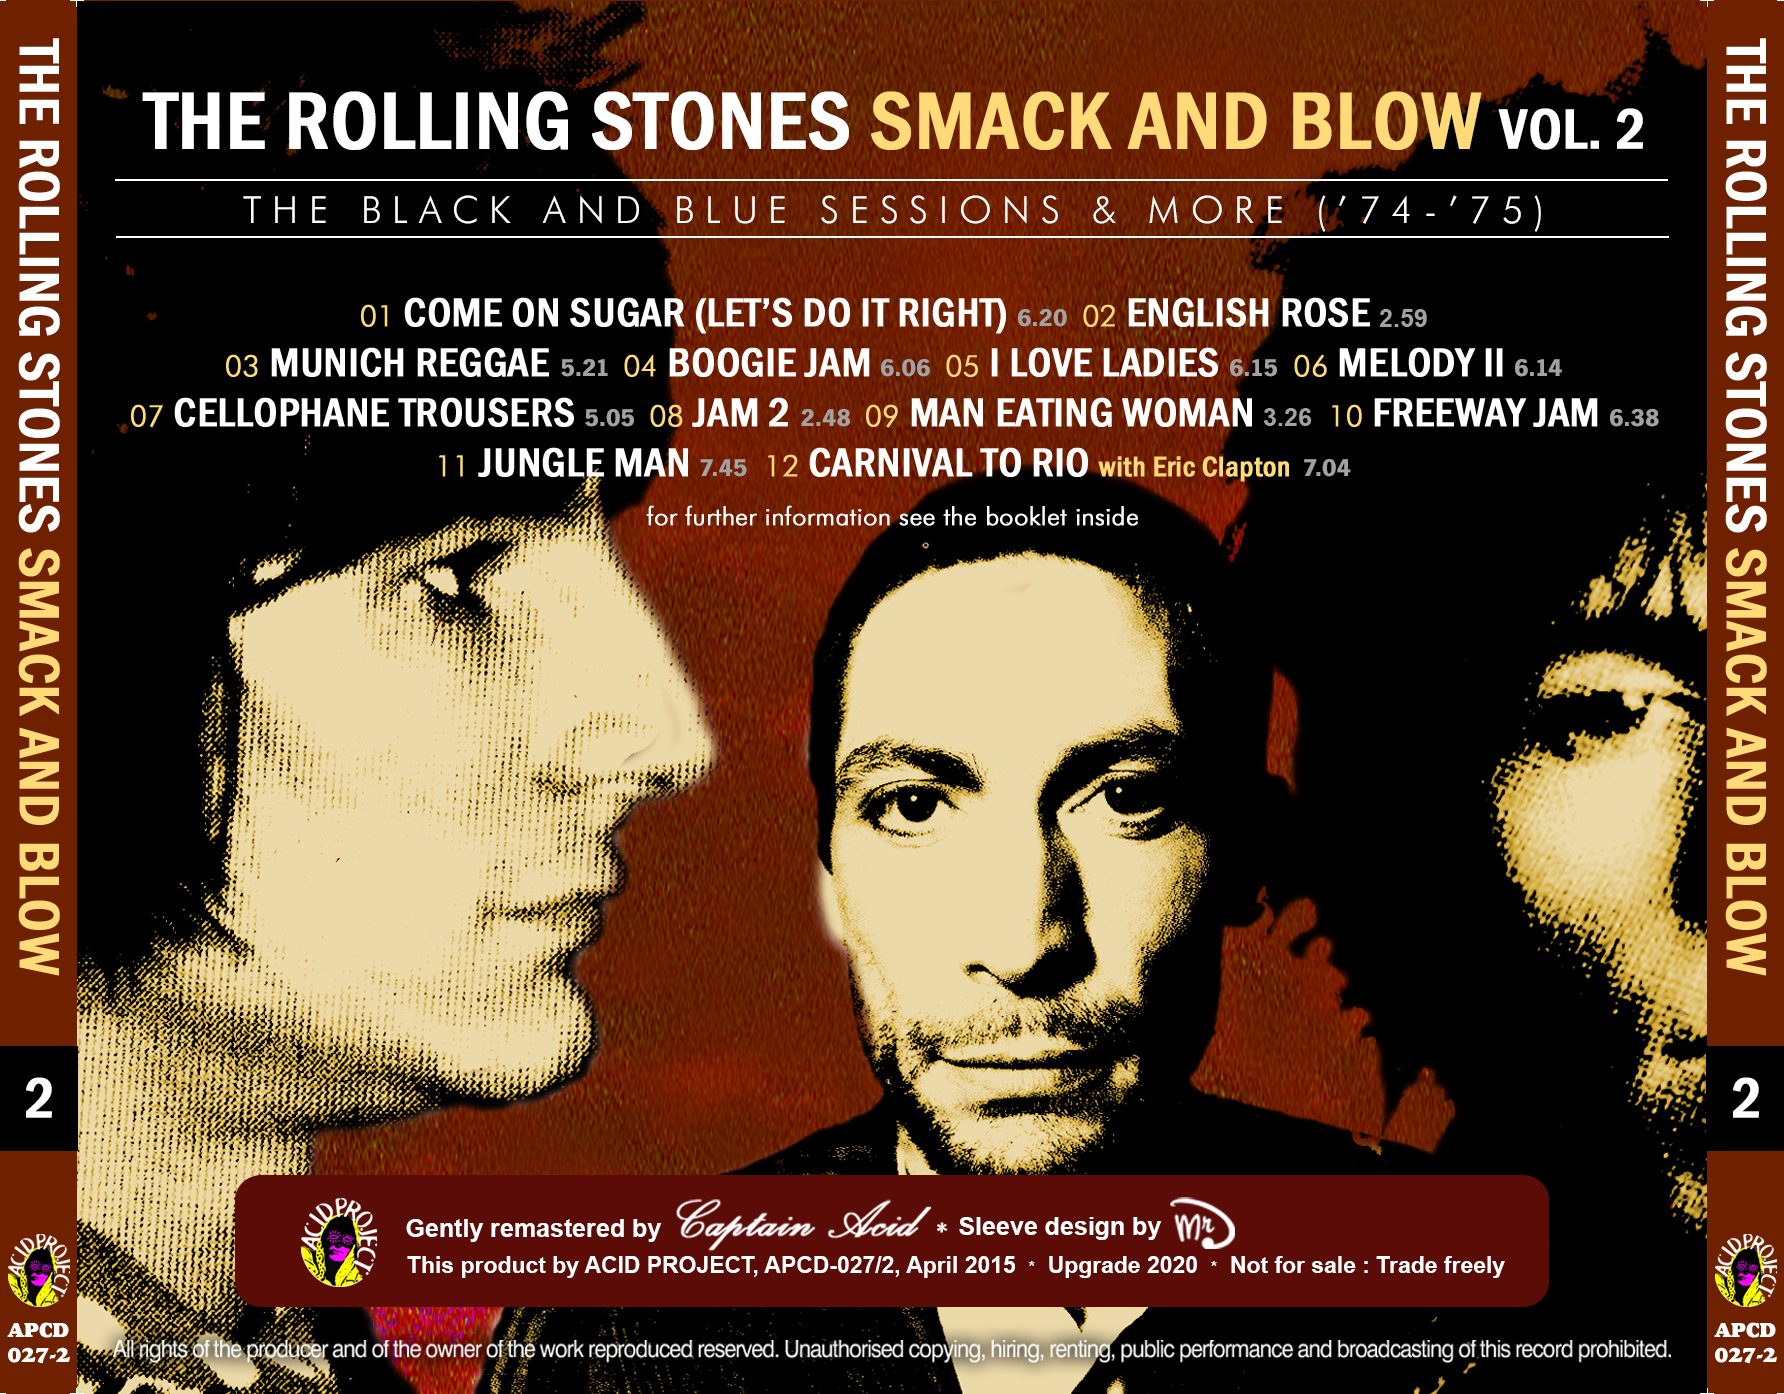 RollingStones-SmackAndBlow (6).jpg